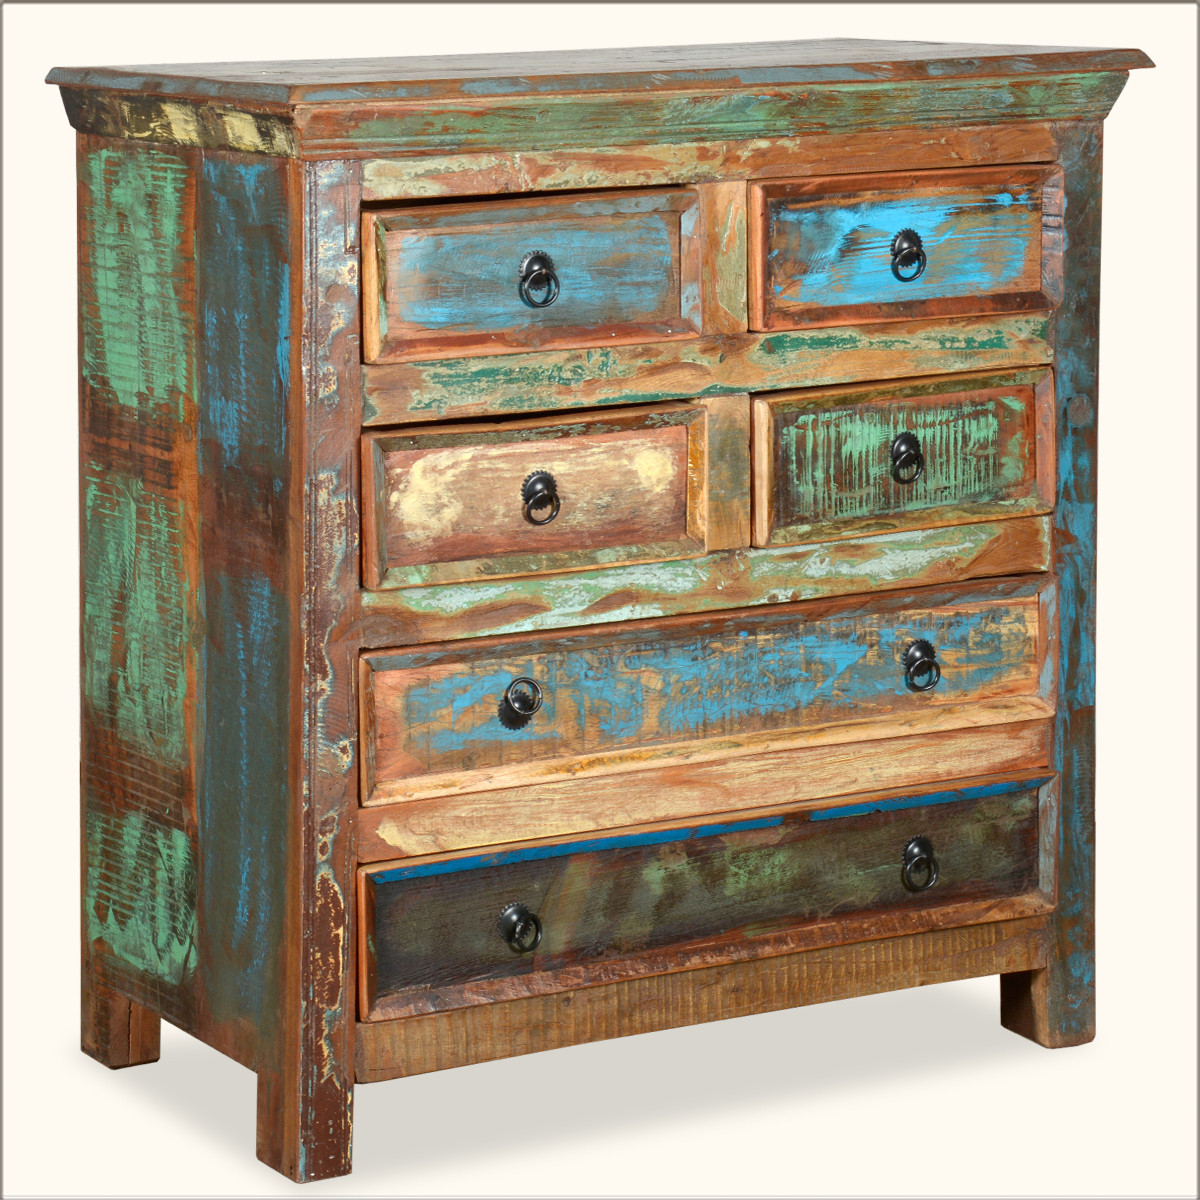 Rustic Bedroom Dresser
 Reclaimed Wood Rustic 6 Drawer Bedroom Dresser Storage